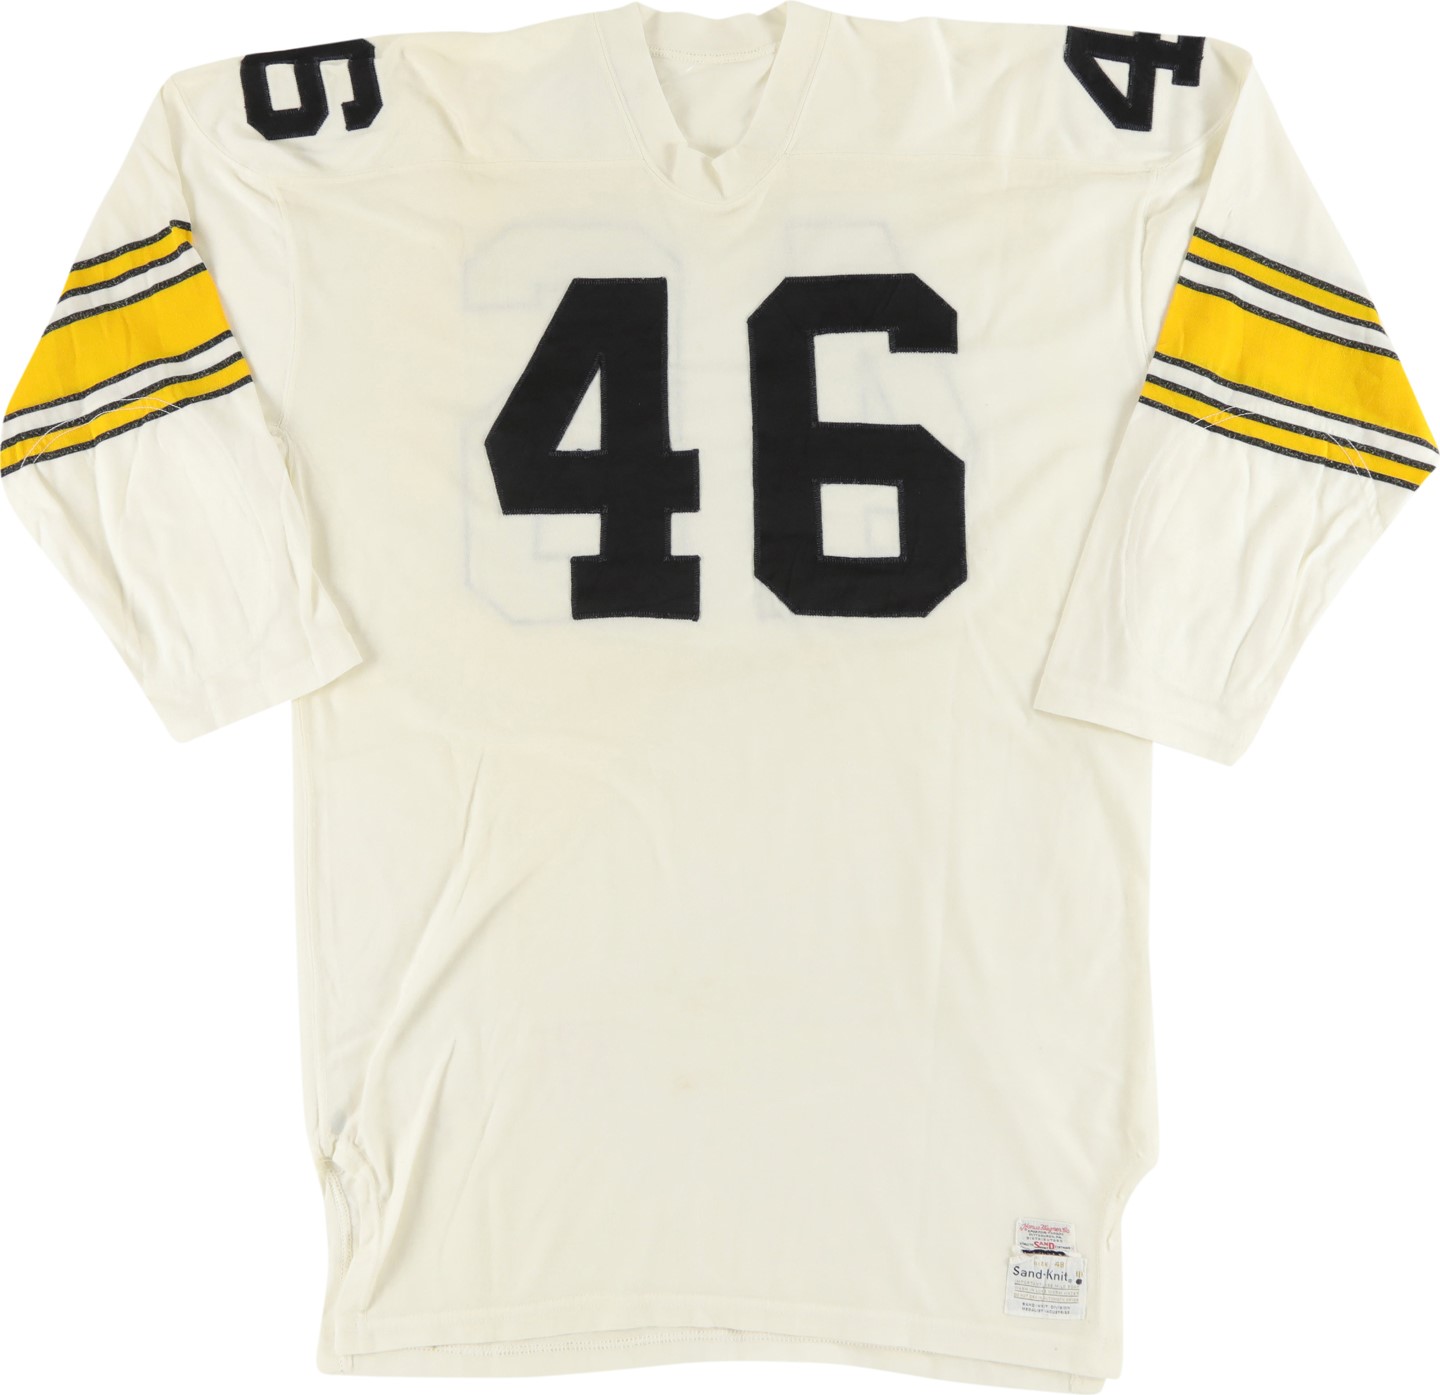 Circa 1960s #46 Blank Pittsburgh Steelers Game Worn Jersey